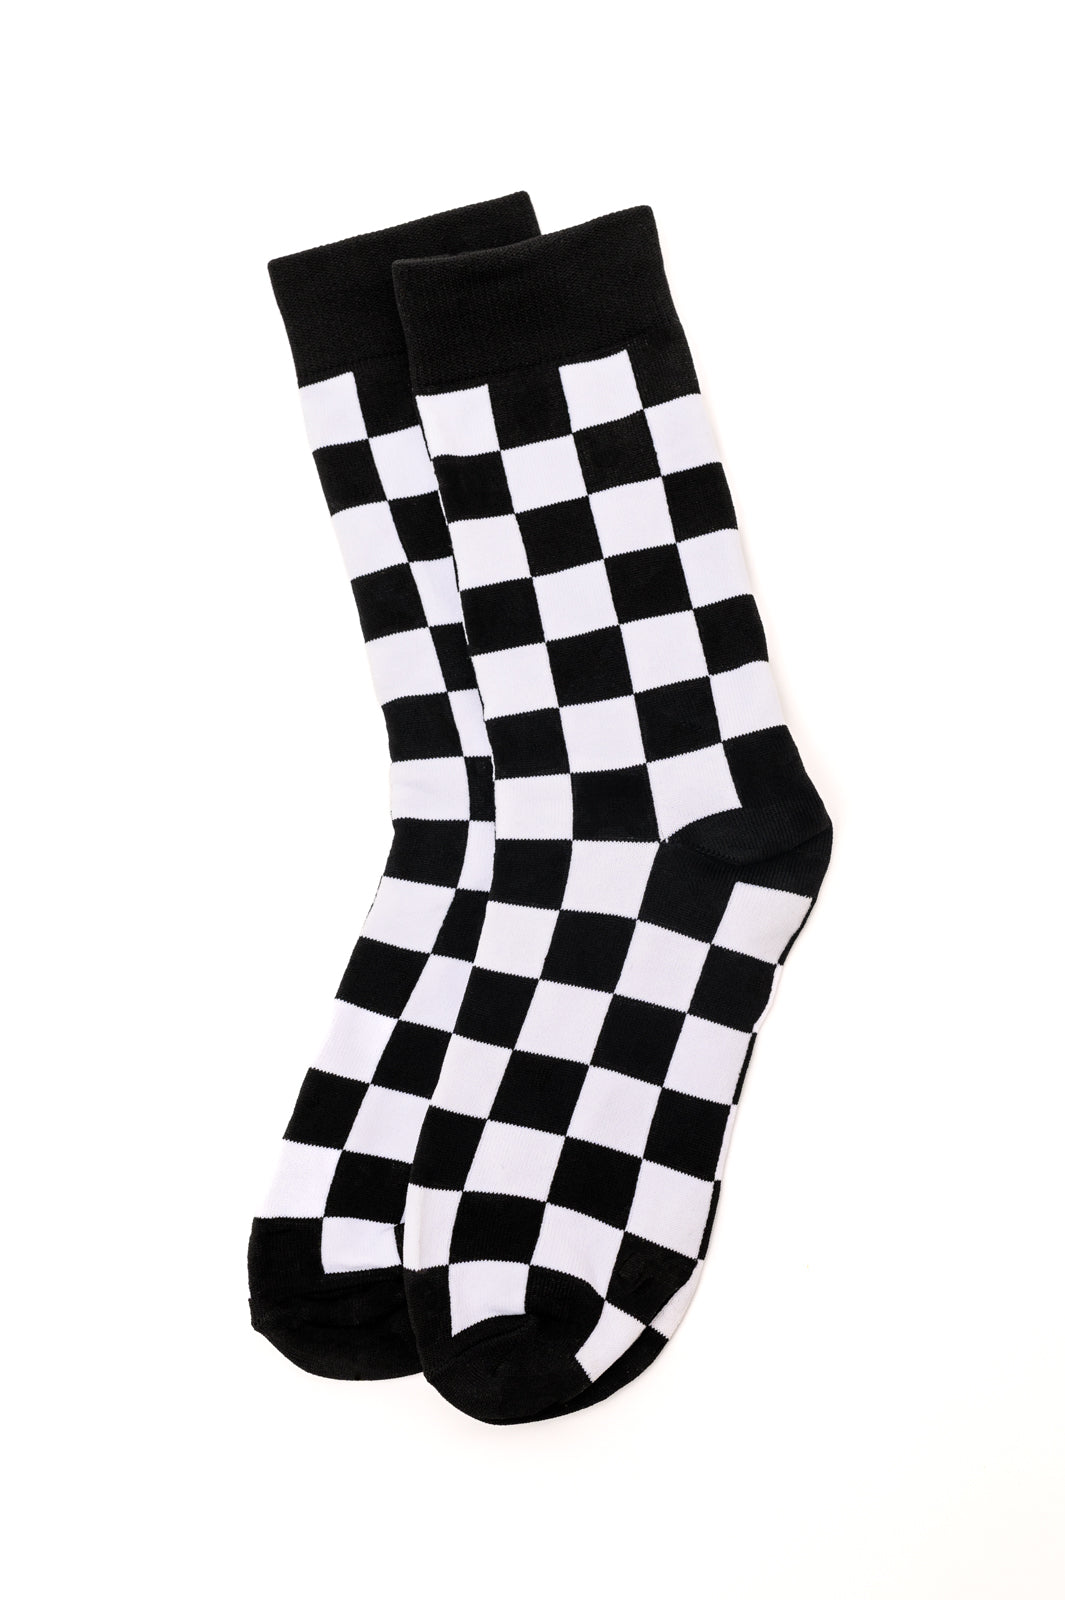 Sweet Socks Checkerboard - Womens